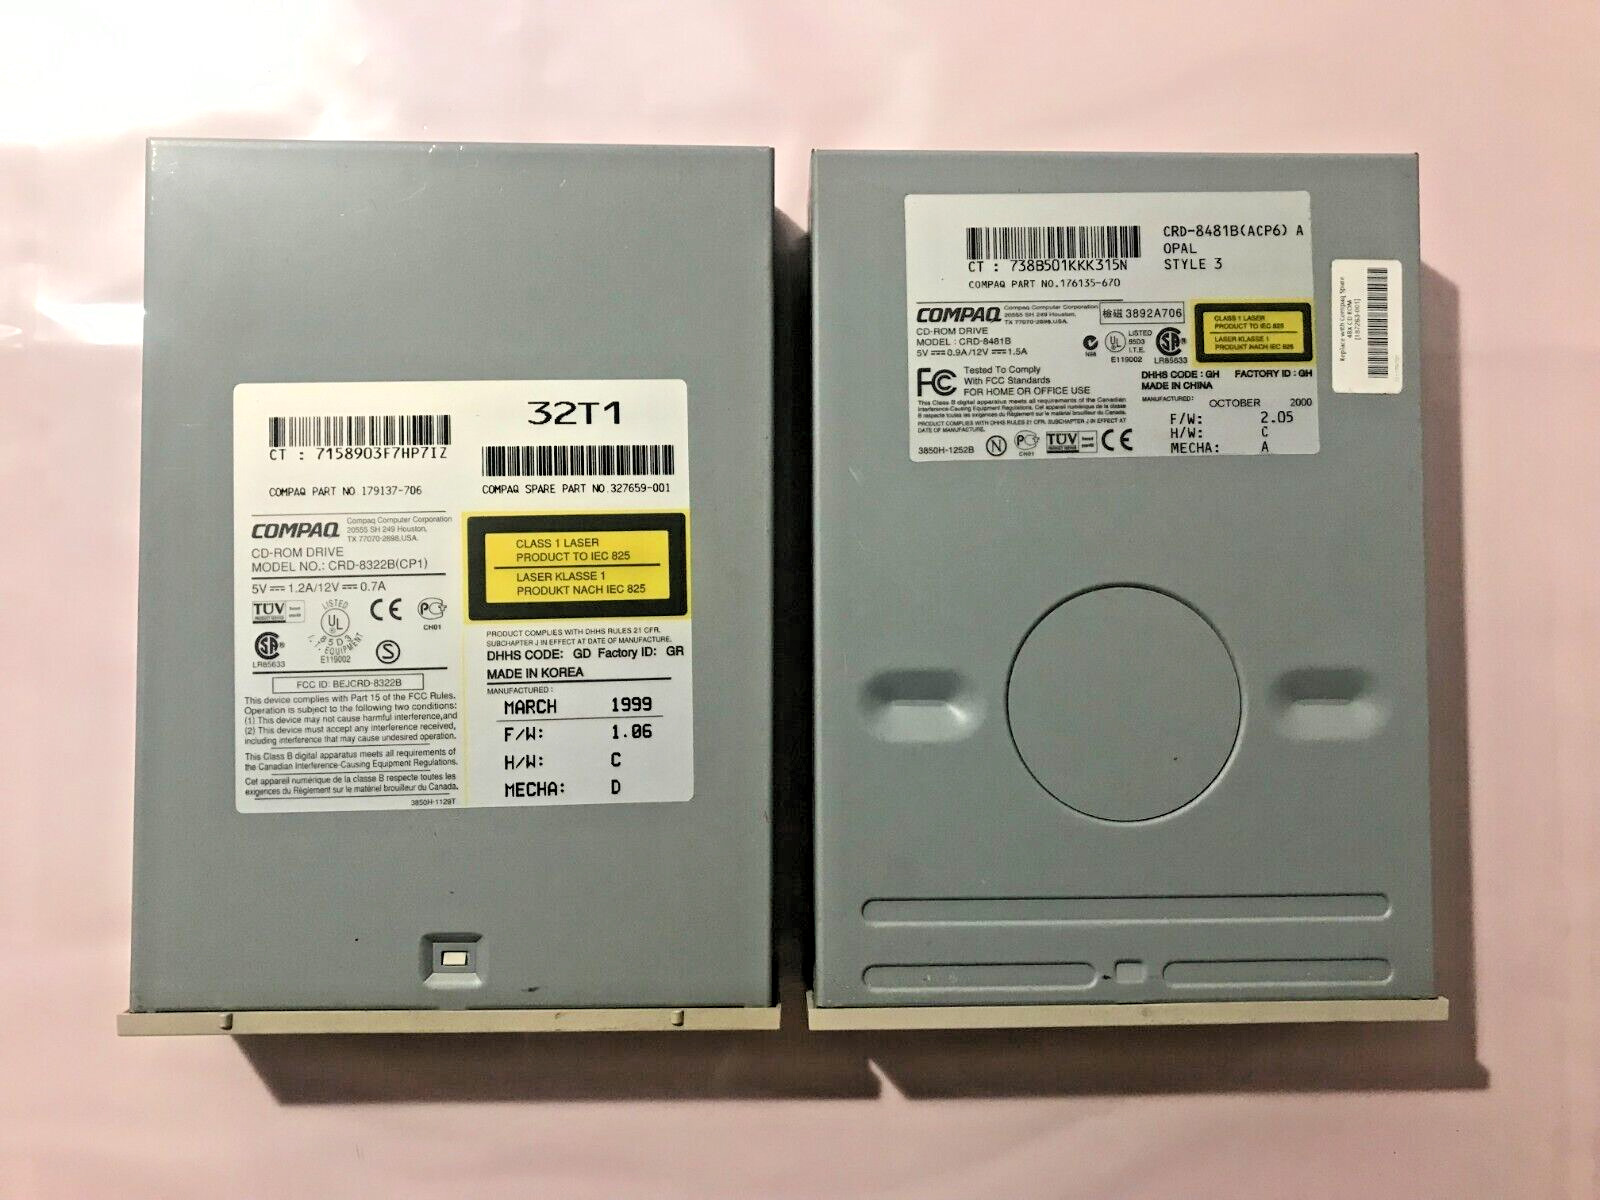 VINTAGE Combo CRD-8322B and CRD-8481B Internal CD-ROM Drive